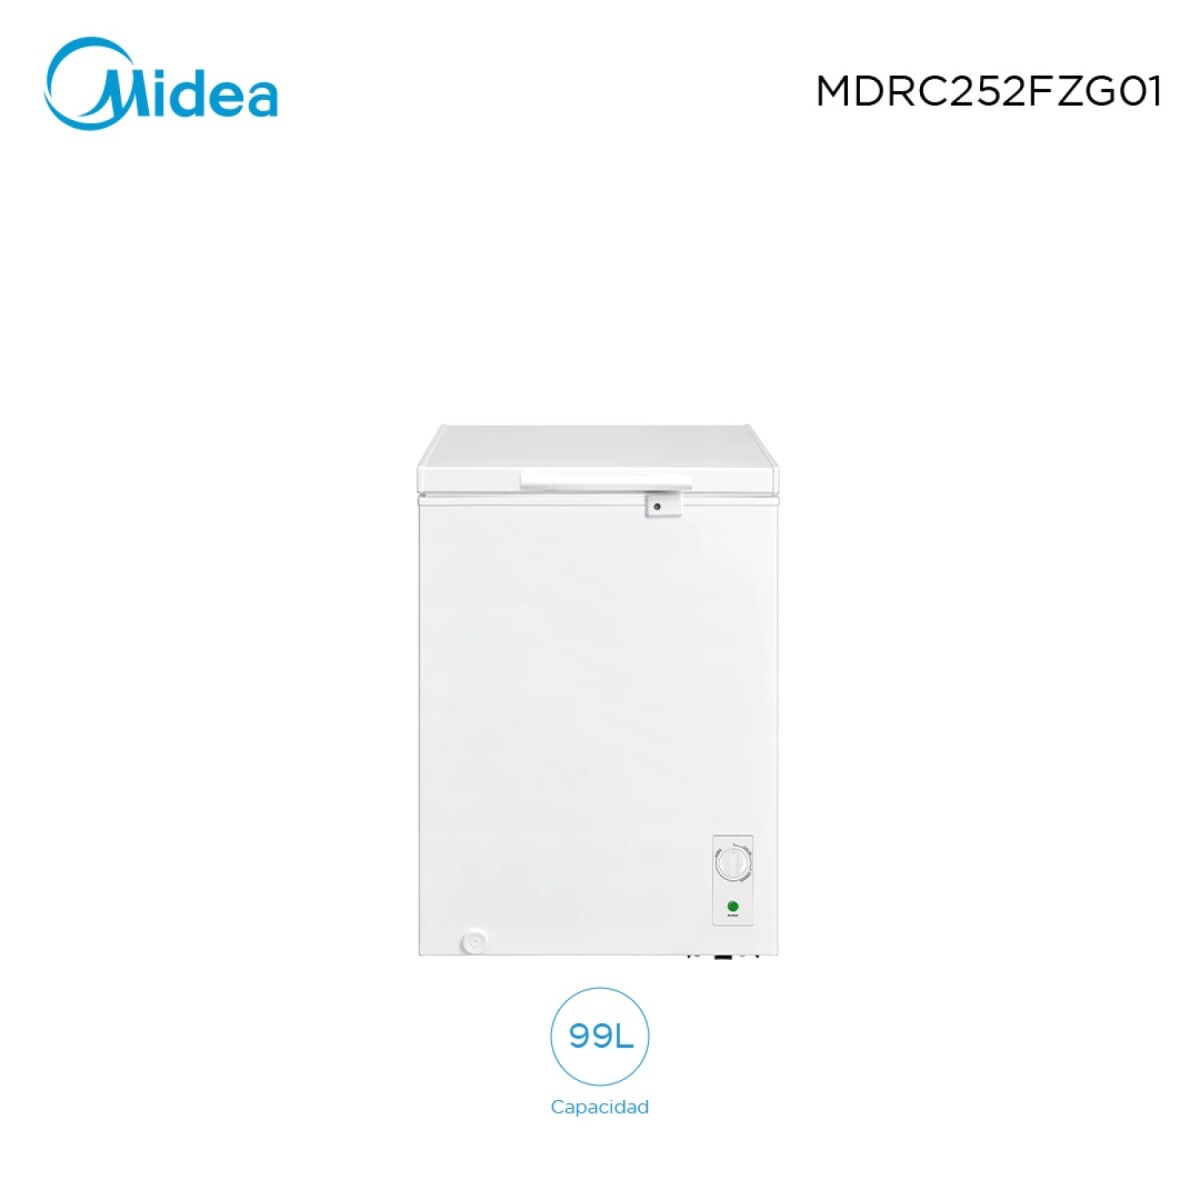 Freezer Horizontal MIDEA MDRC252FZG01 Capacidad 99 Lt 